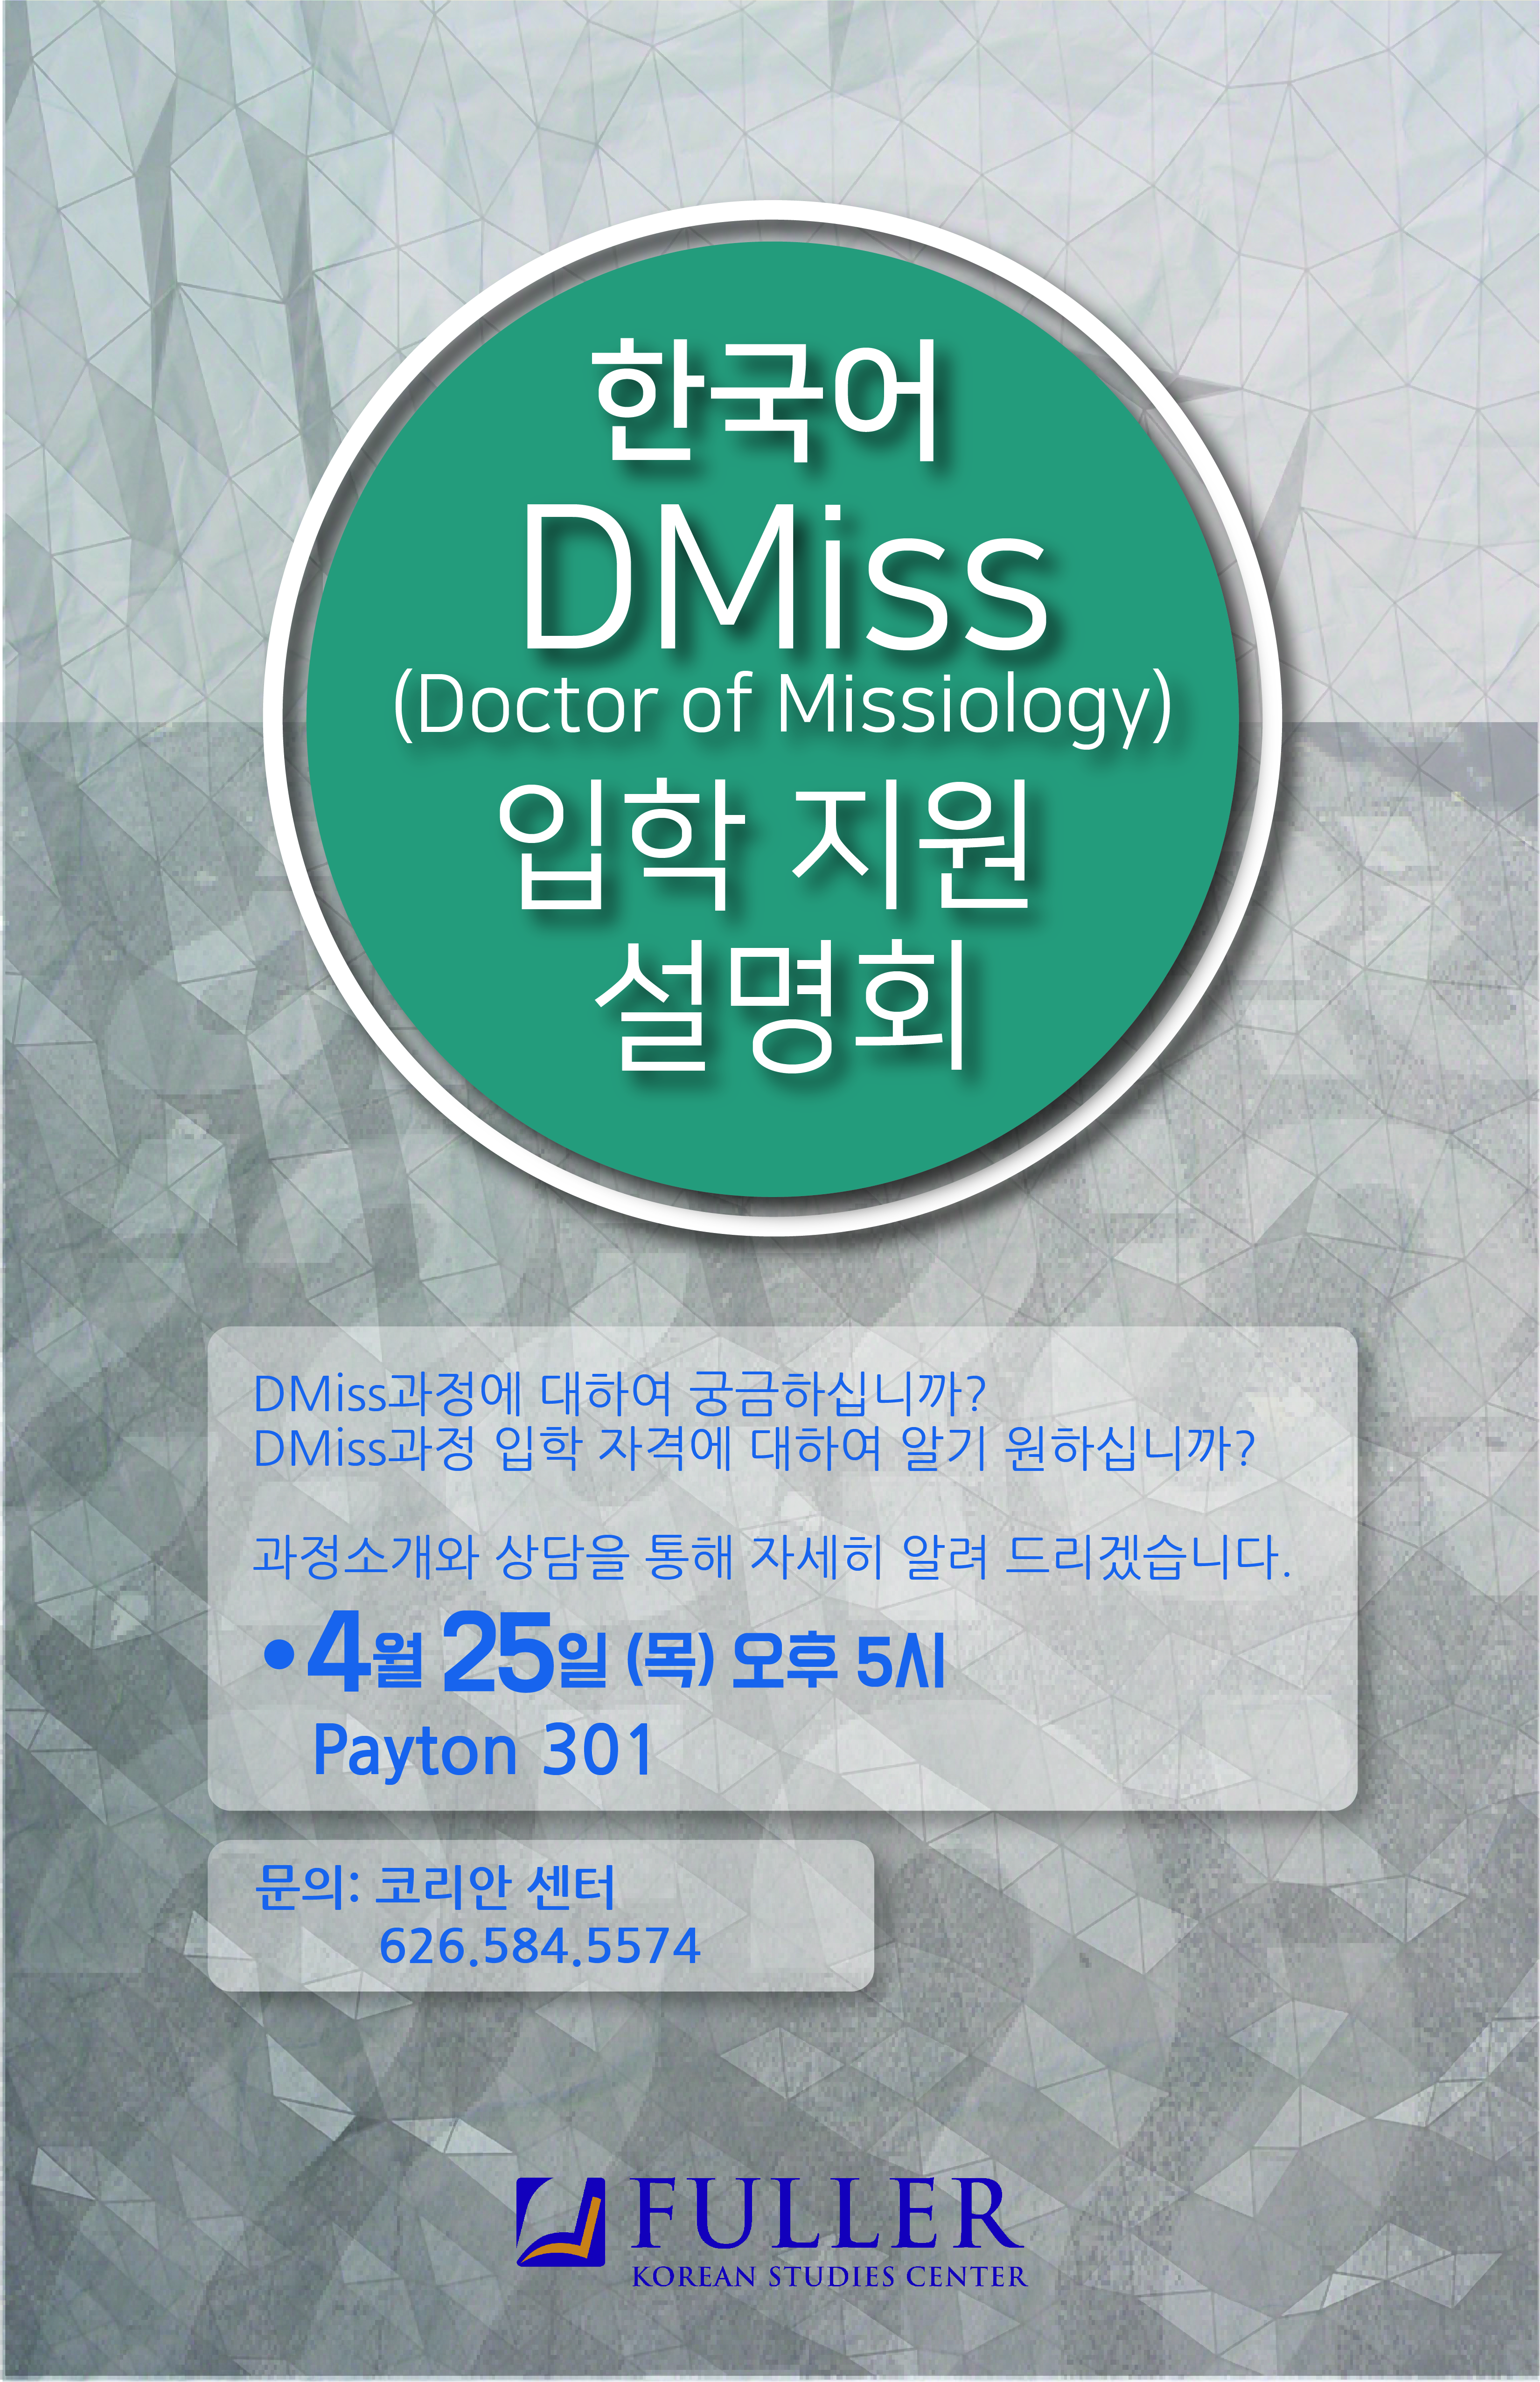 DMiss Info Meeting 2019.jpg